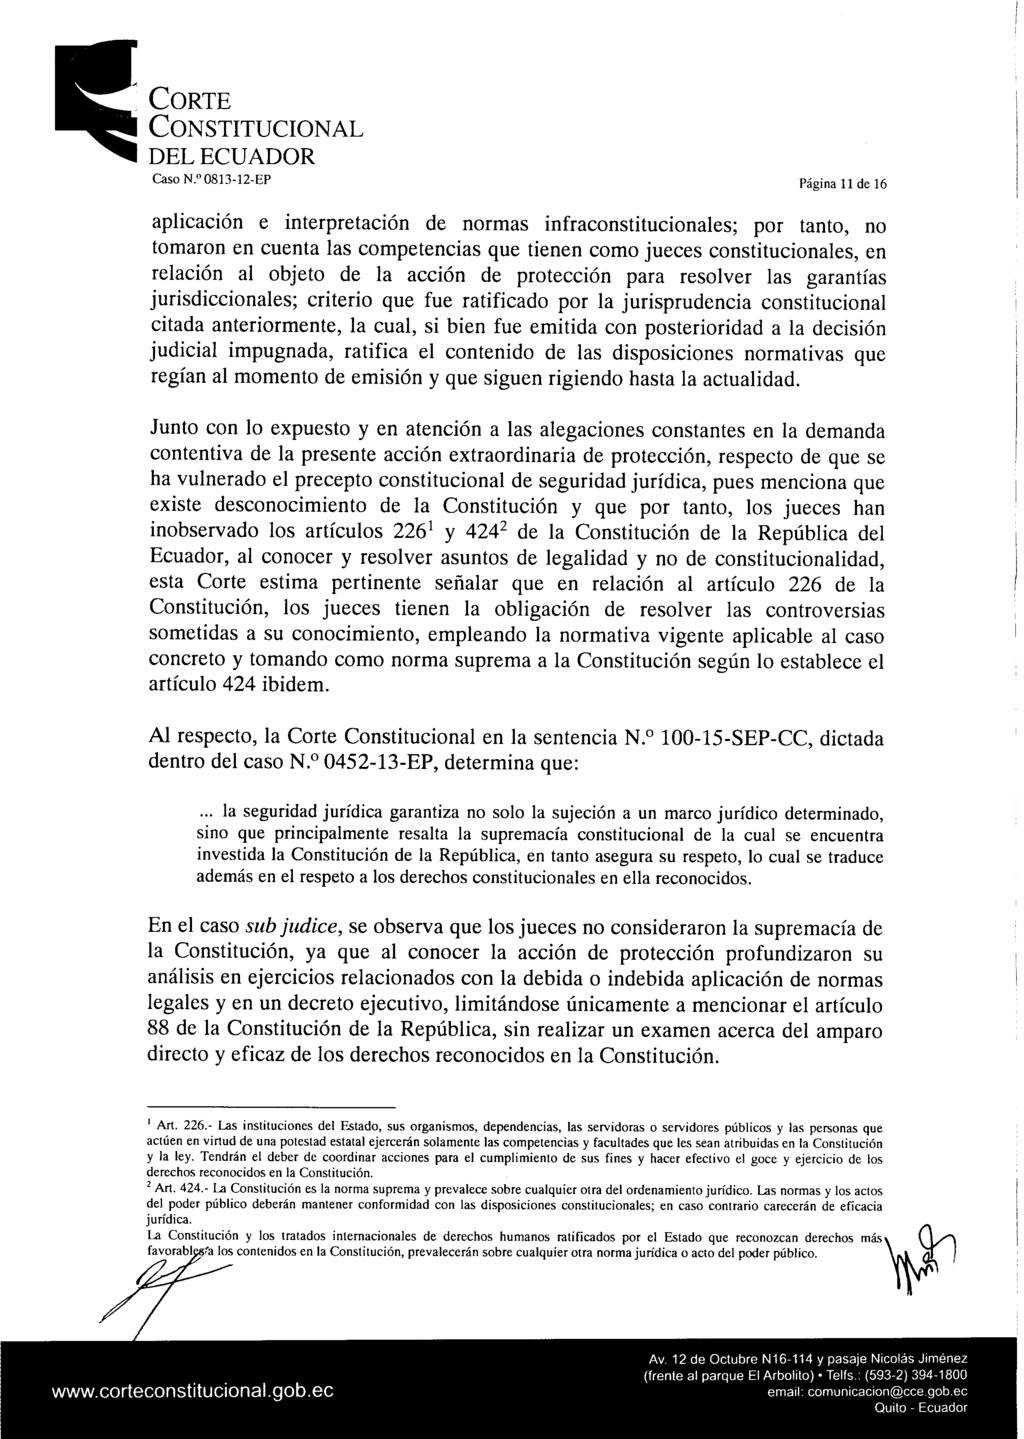 Corte Constitucional delecuador Caso N.